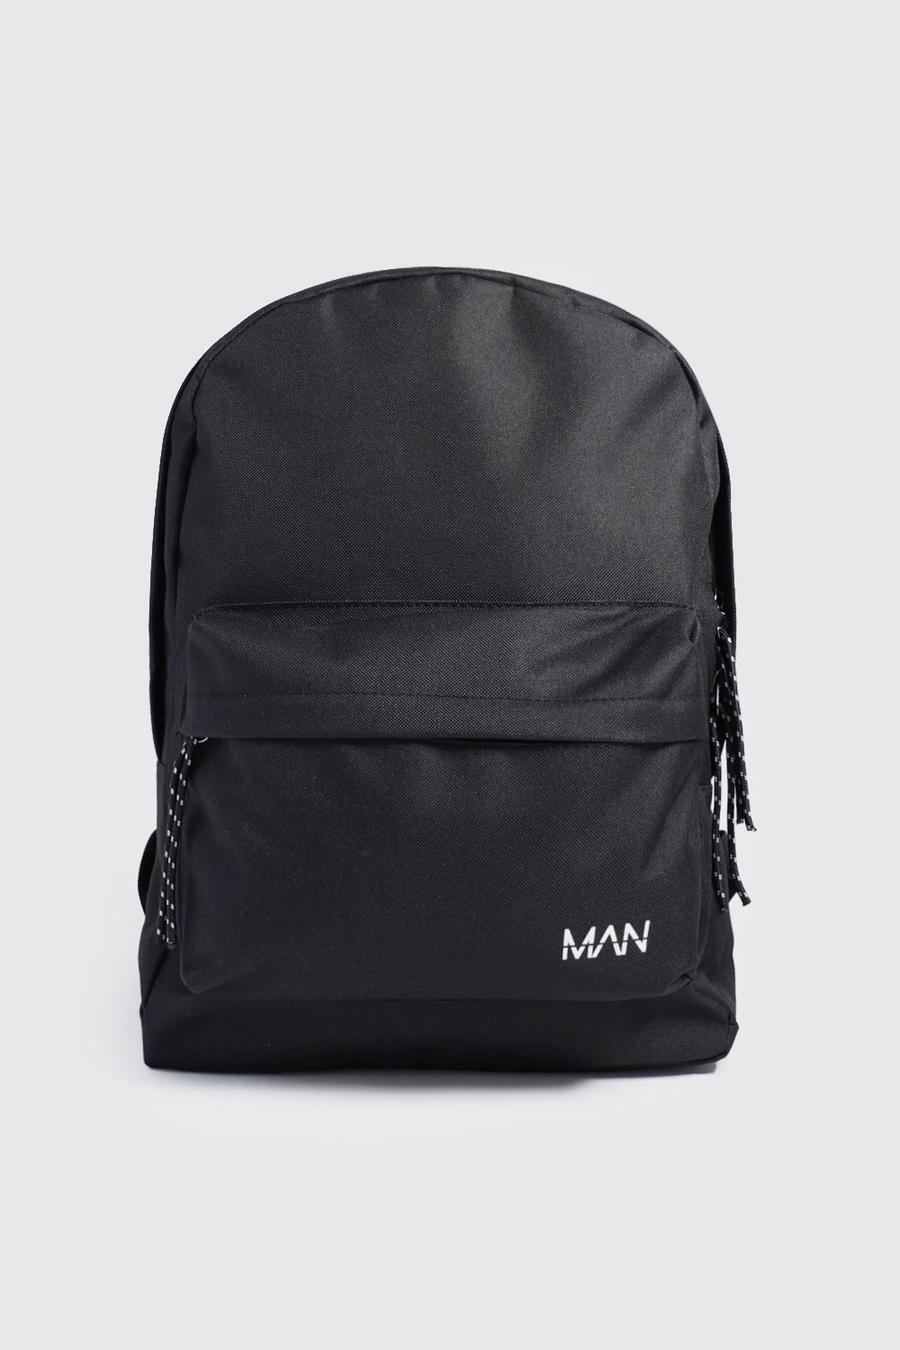 MAN Print Nylon Backpack image number 1